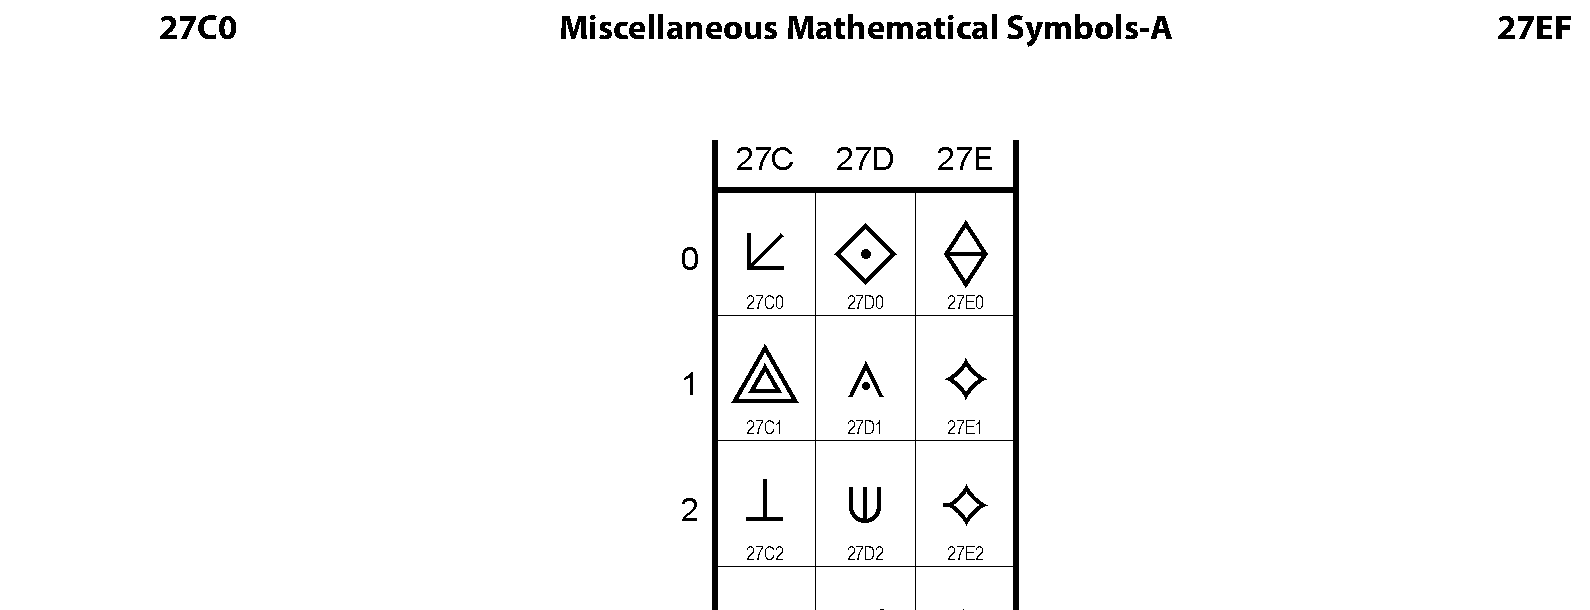 Unicode - Miscellaneous Mathematical Symbols-A